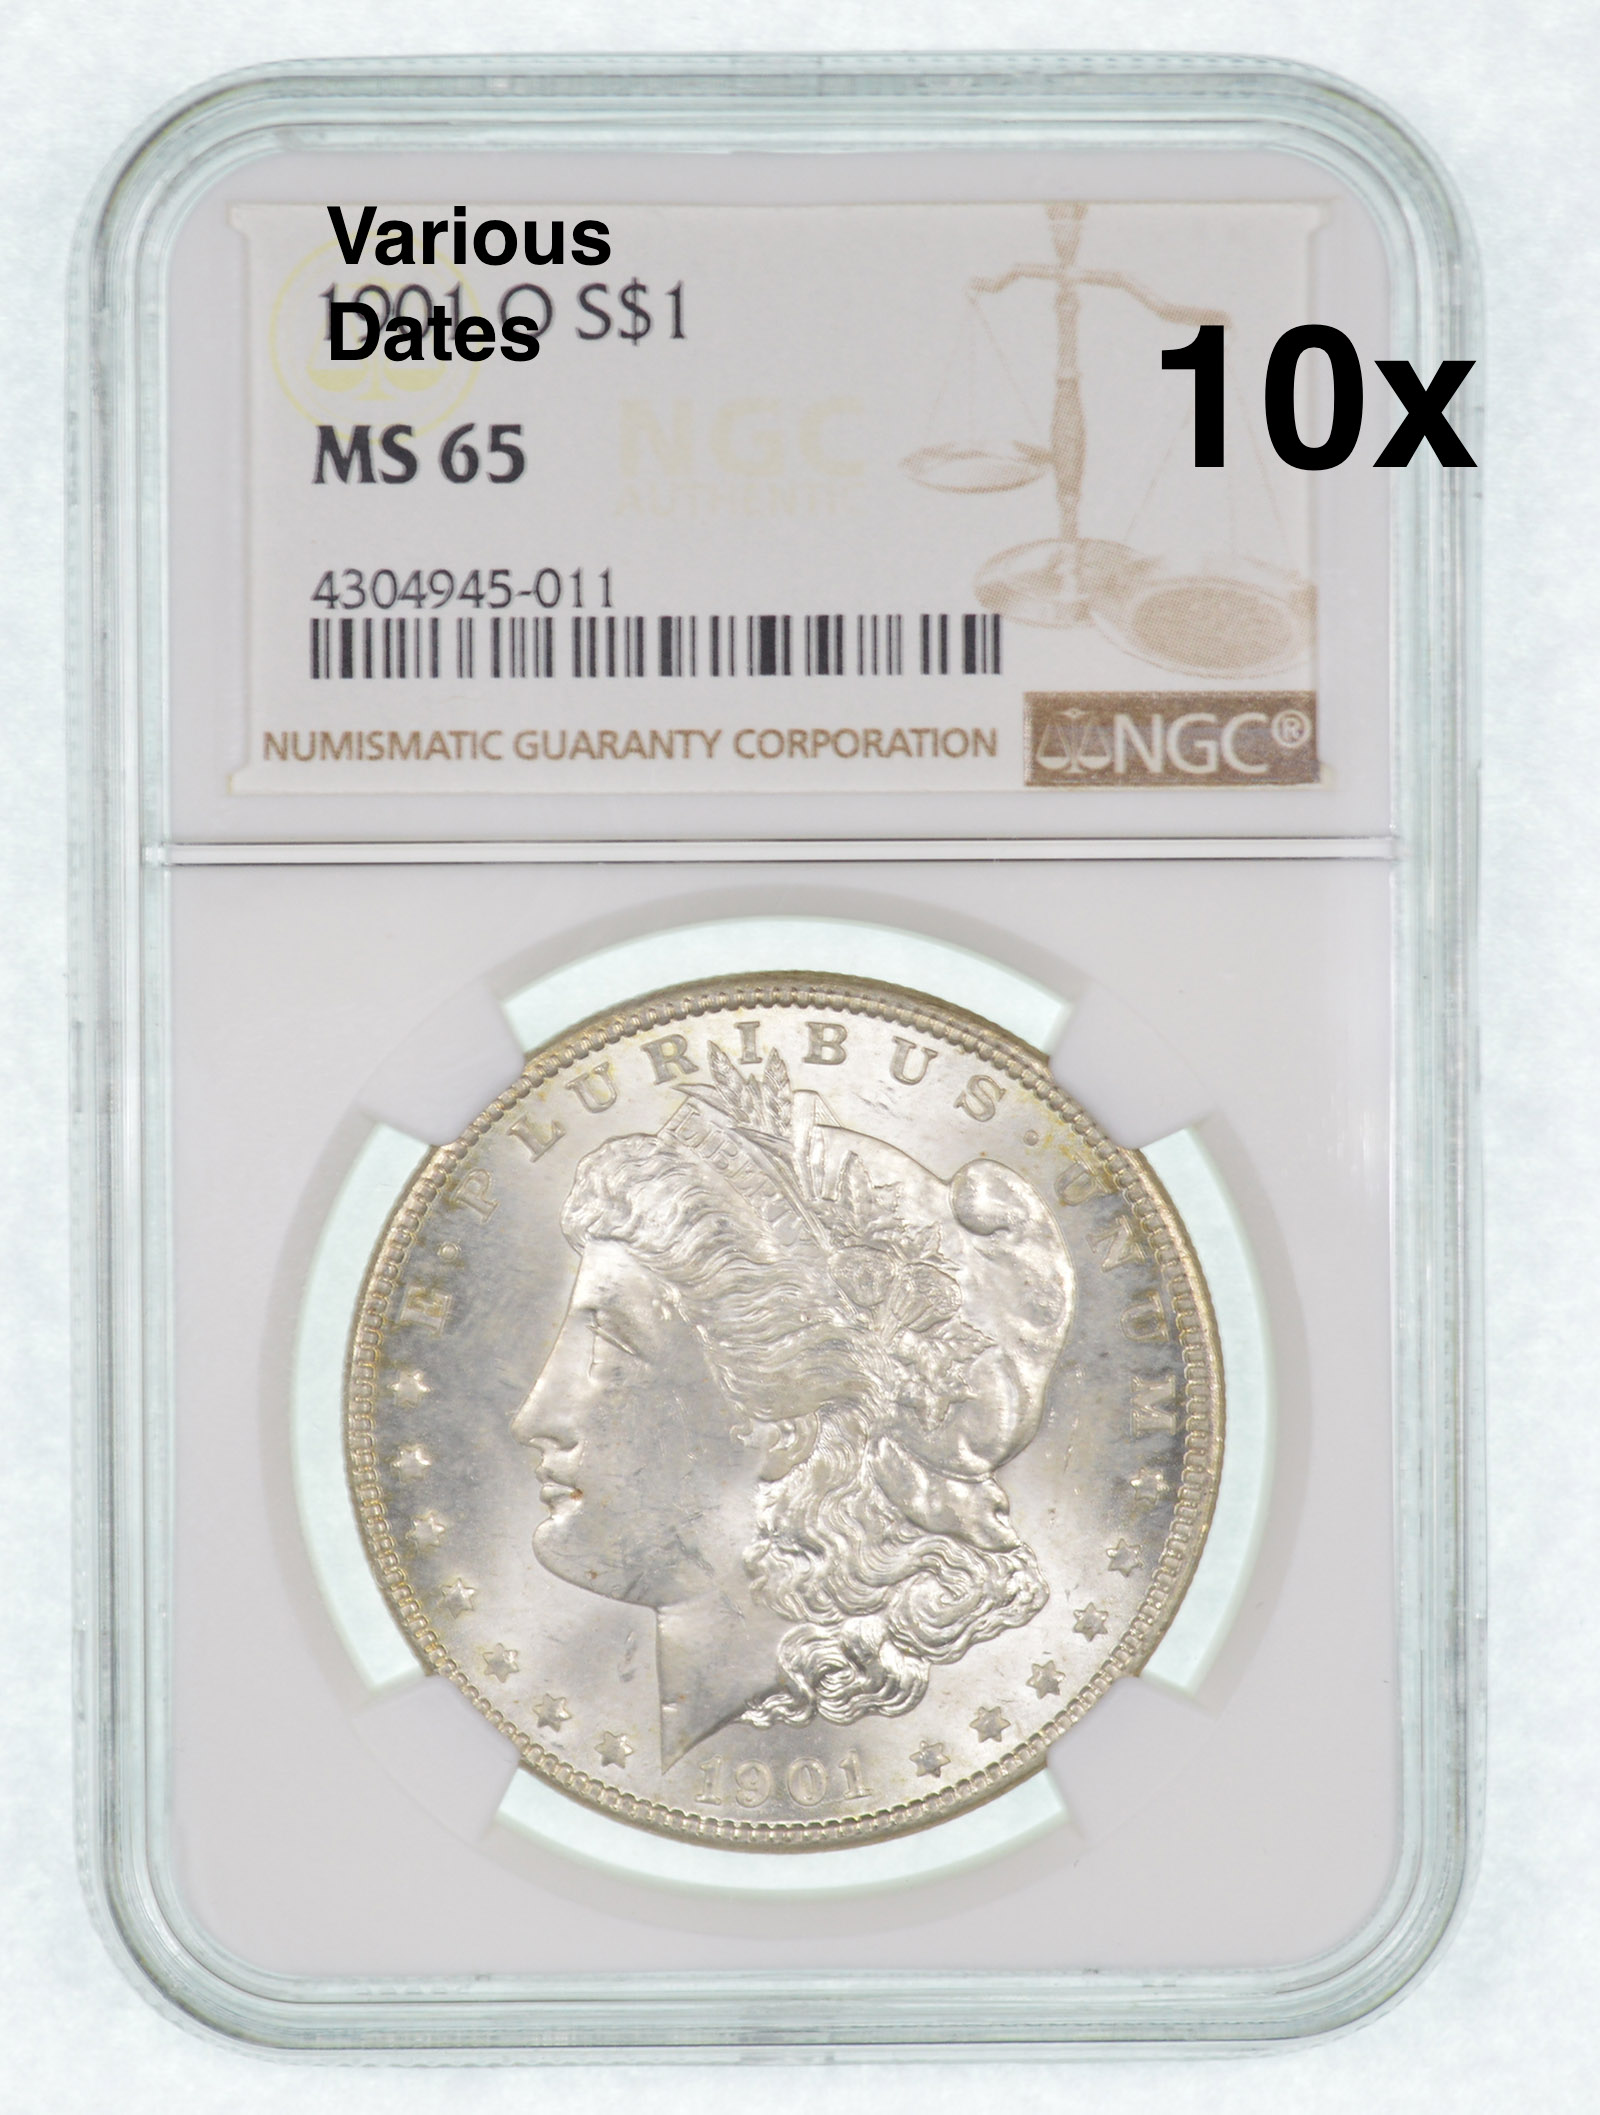 Lot of 10 Mixed Dates MS-65 NGC Morgan Silver Dollars | Property Room